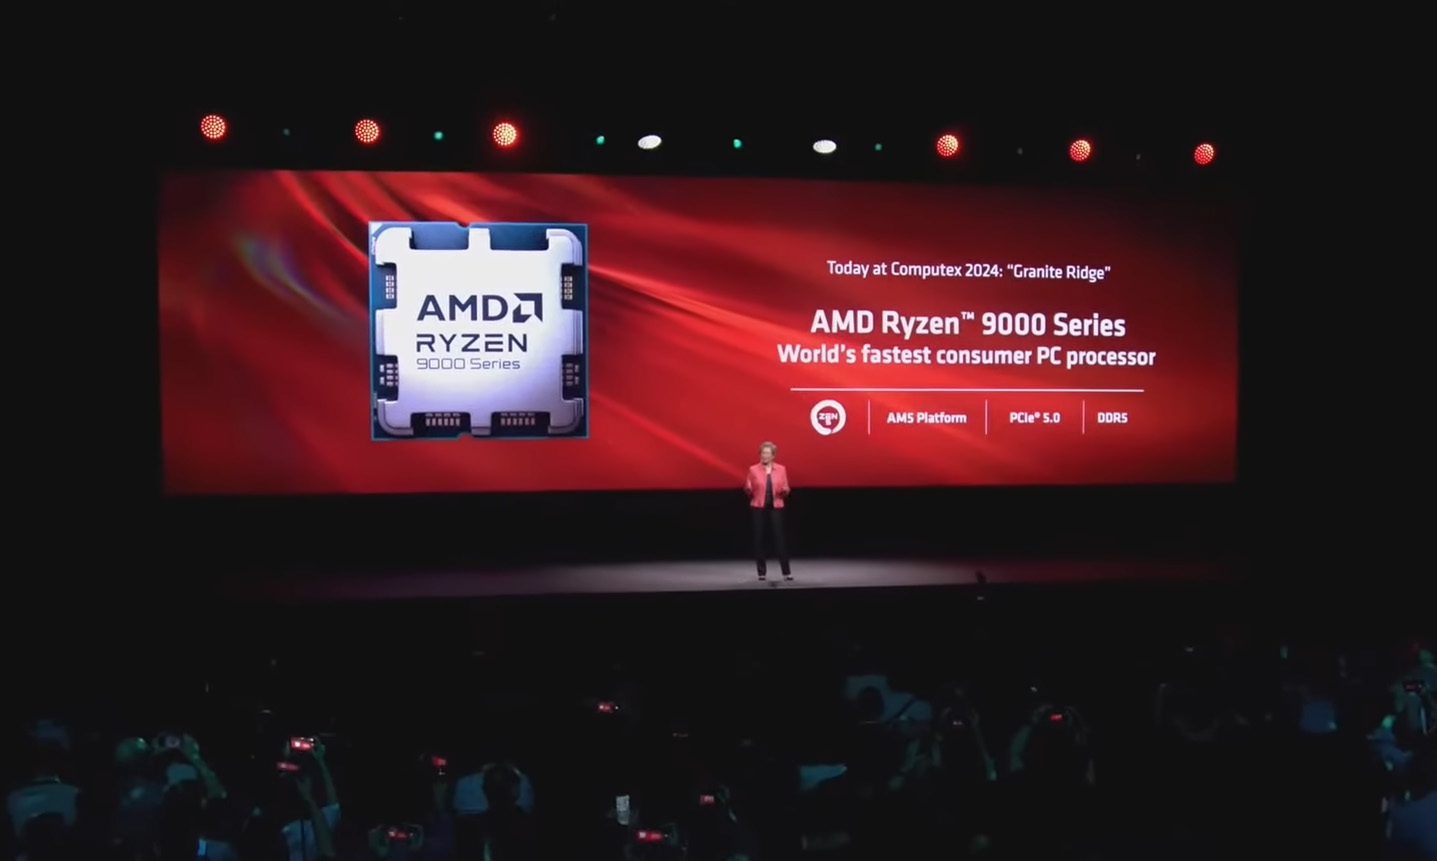 AMD CEO Lisa Su announcing the new Ryzen 9000 series desktop CPUs.